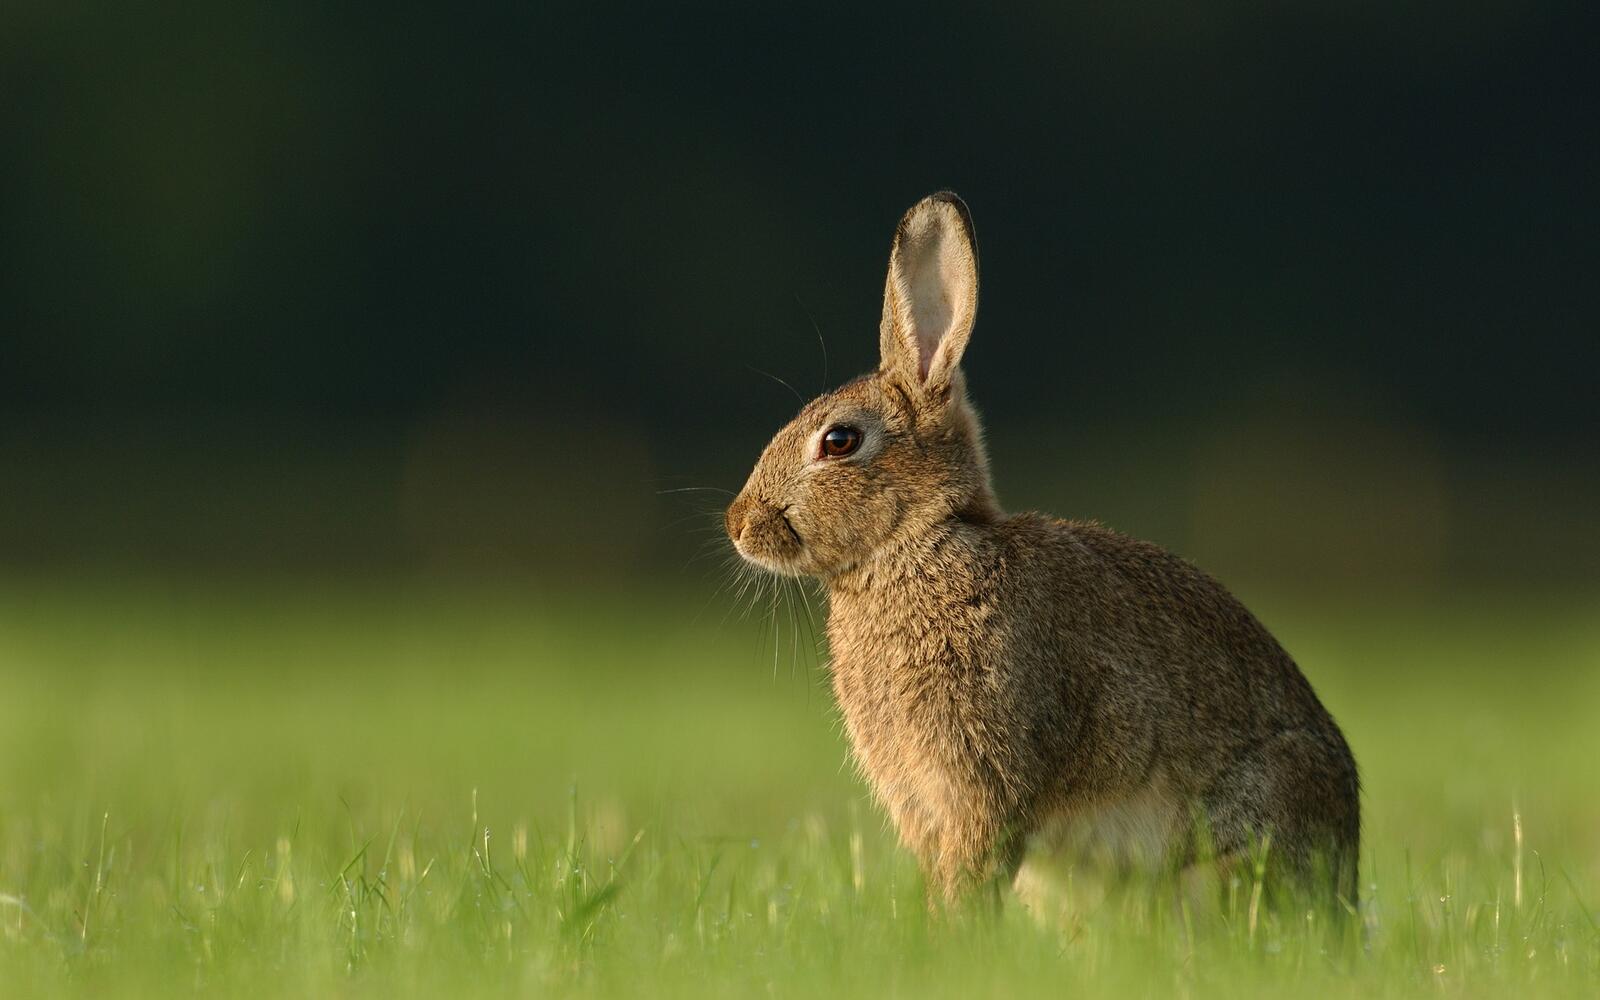 Wallpapers hare grass rabbit on the desktop